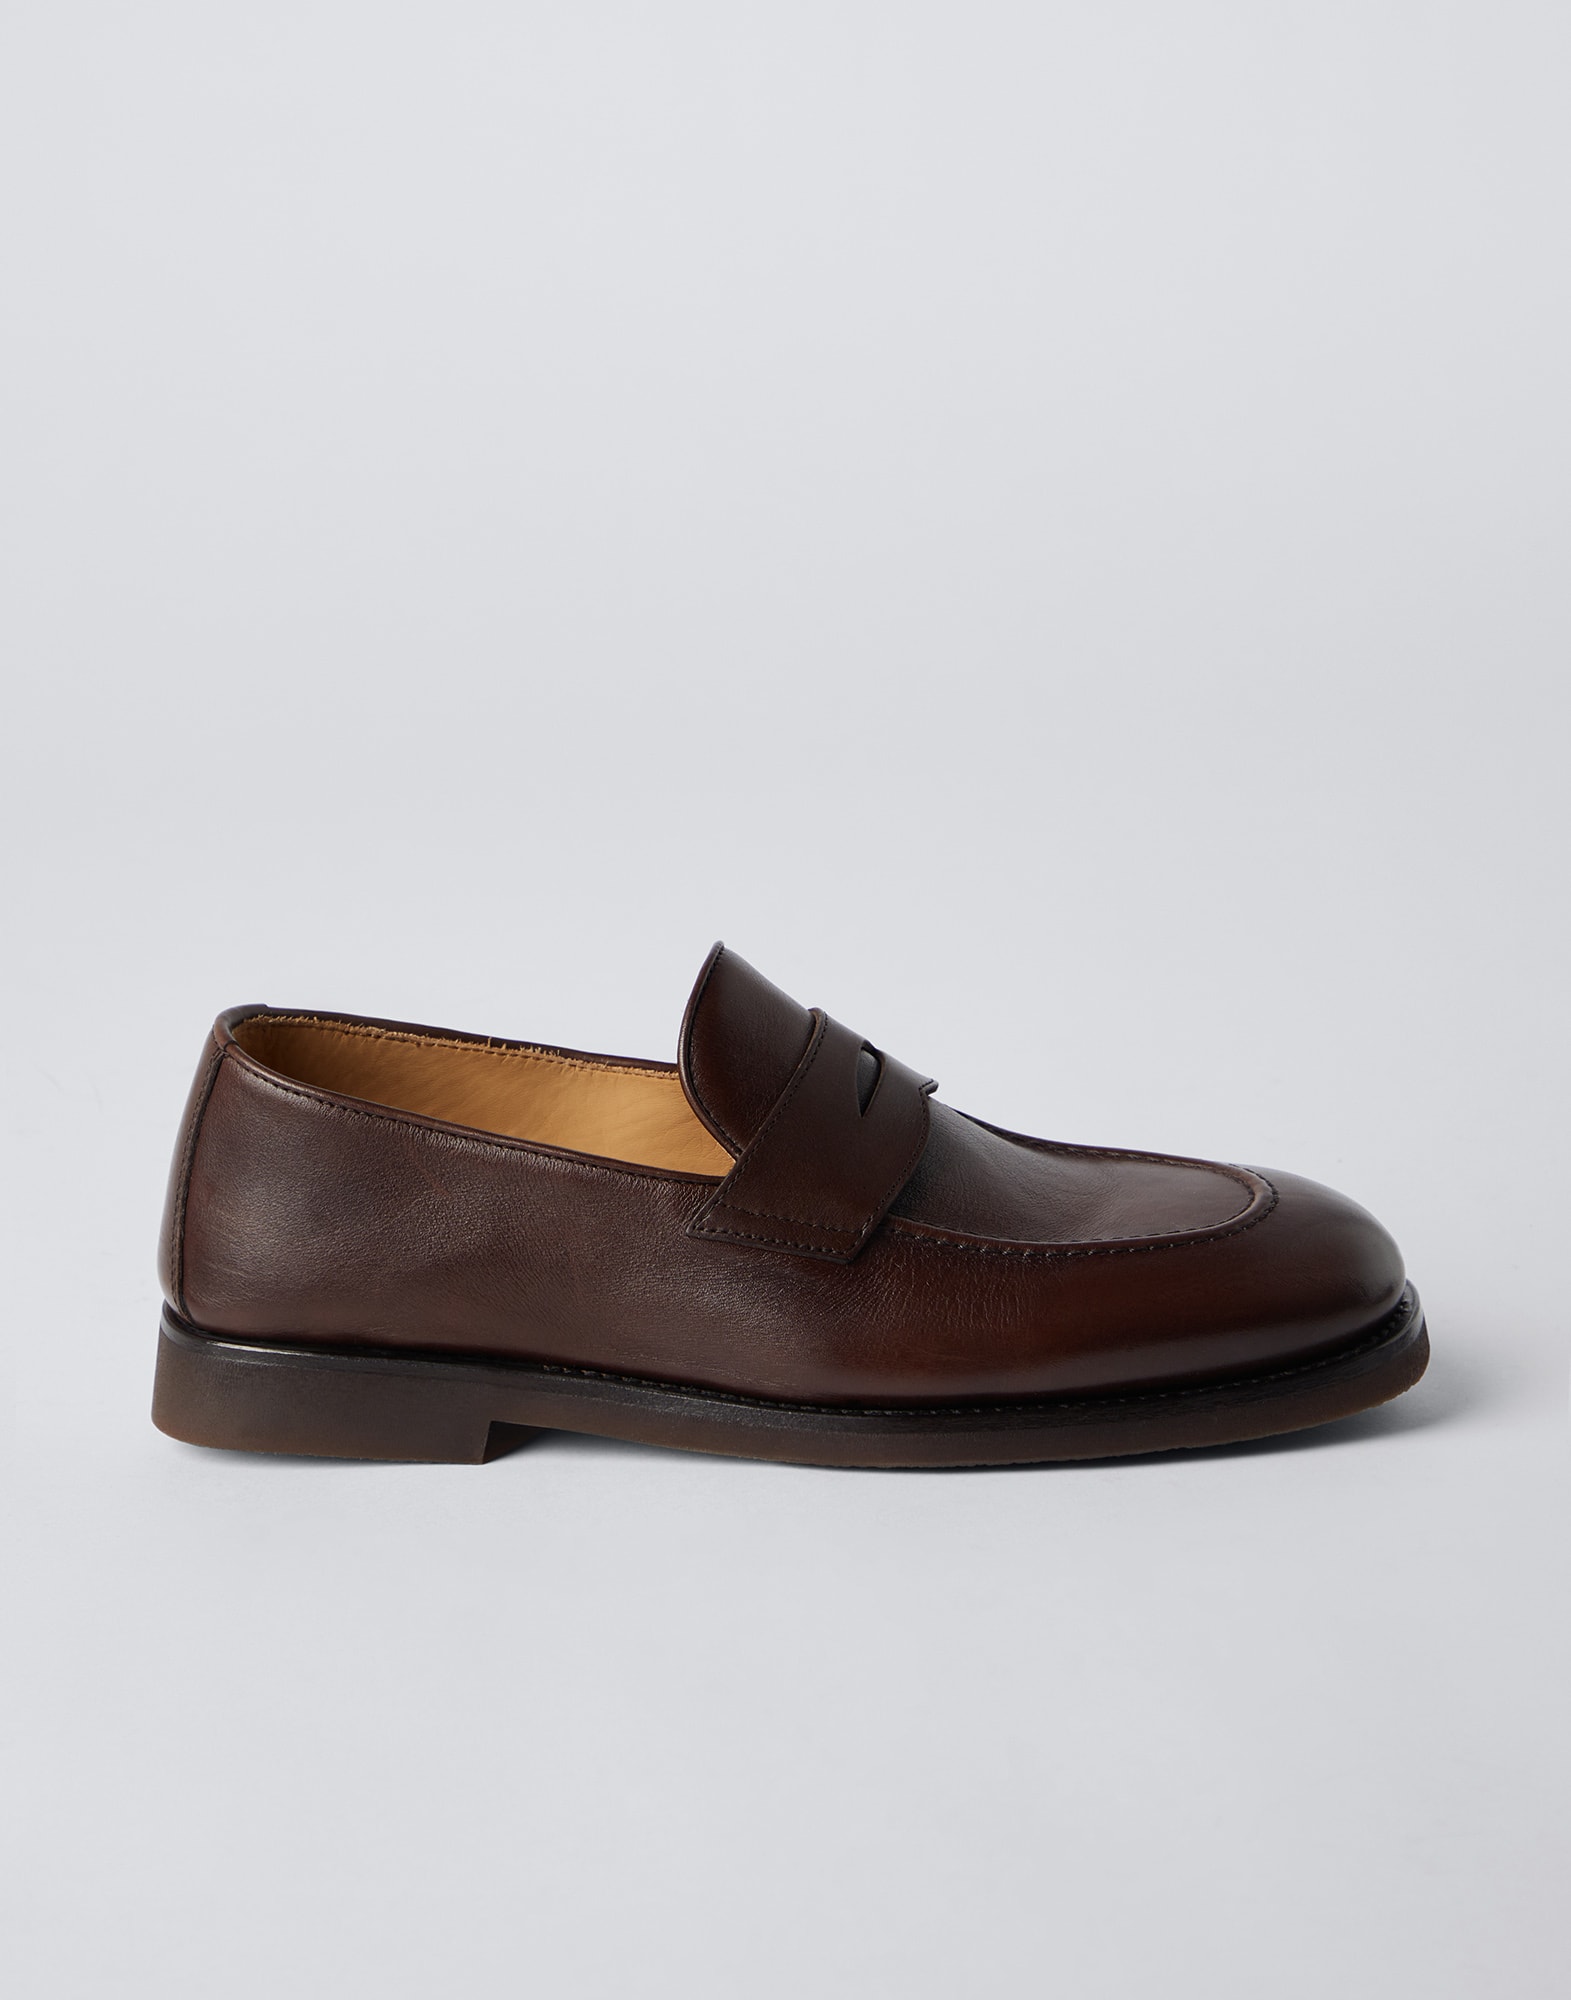 Calfskin penny loafers (232MZUANTE880) for Man | Brunello Cucinelli